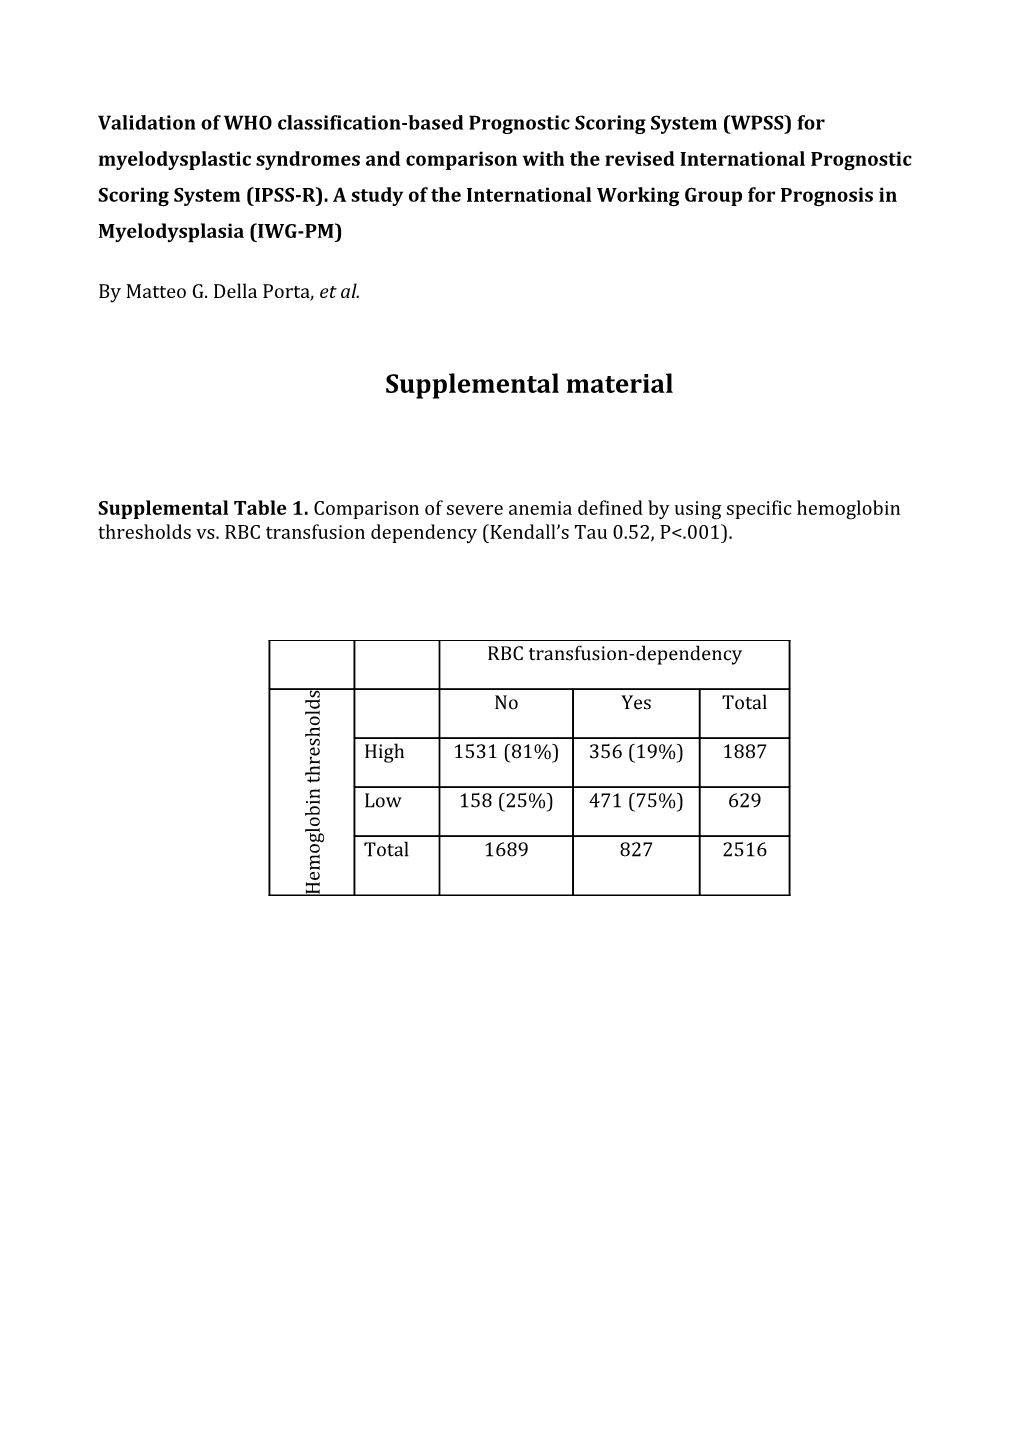 Validation of WHO Classification-Based Prognostic Scoring System (WPSS) for Myelodysplastic